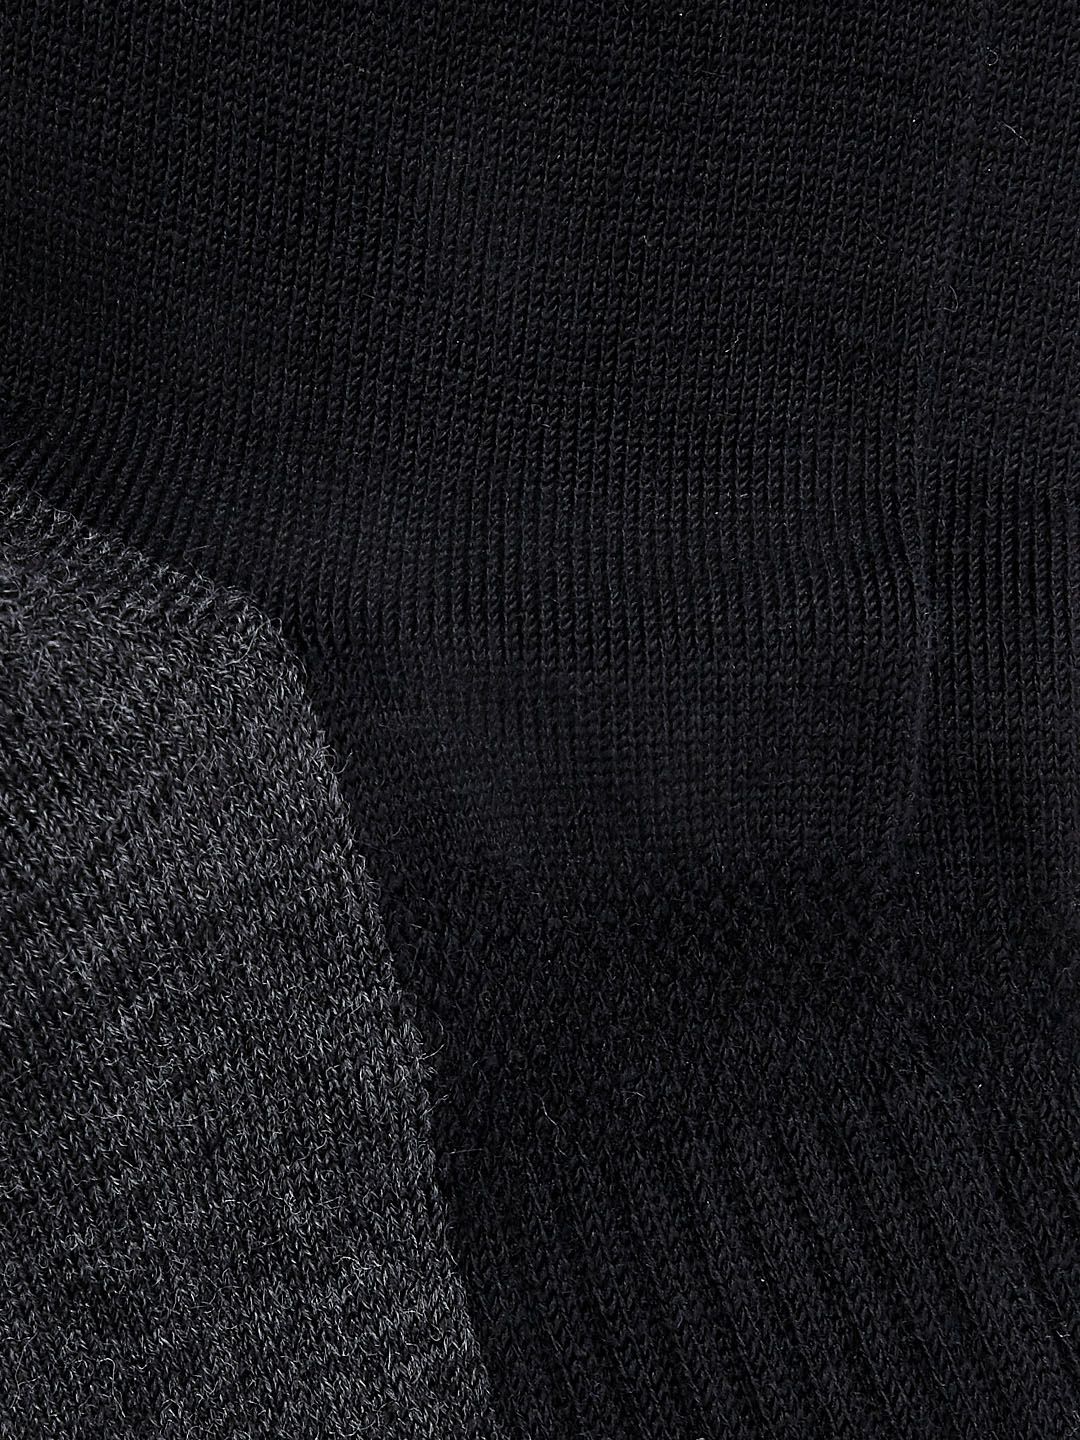 Black-Grey Merino Wool Cushioned Socks | Kids 3 Pack